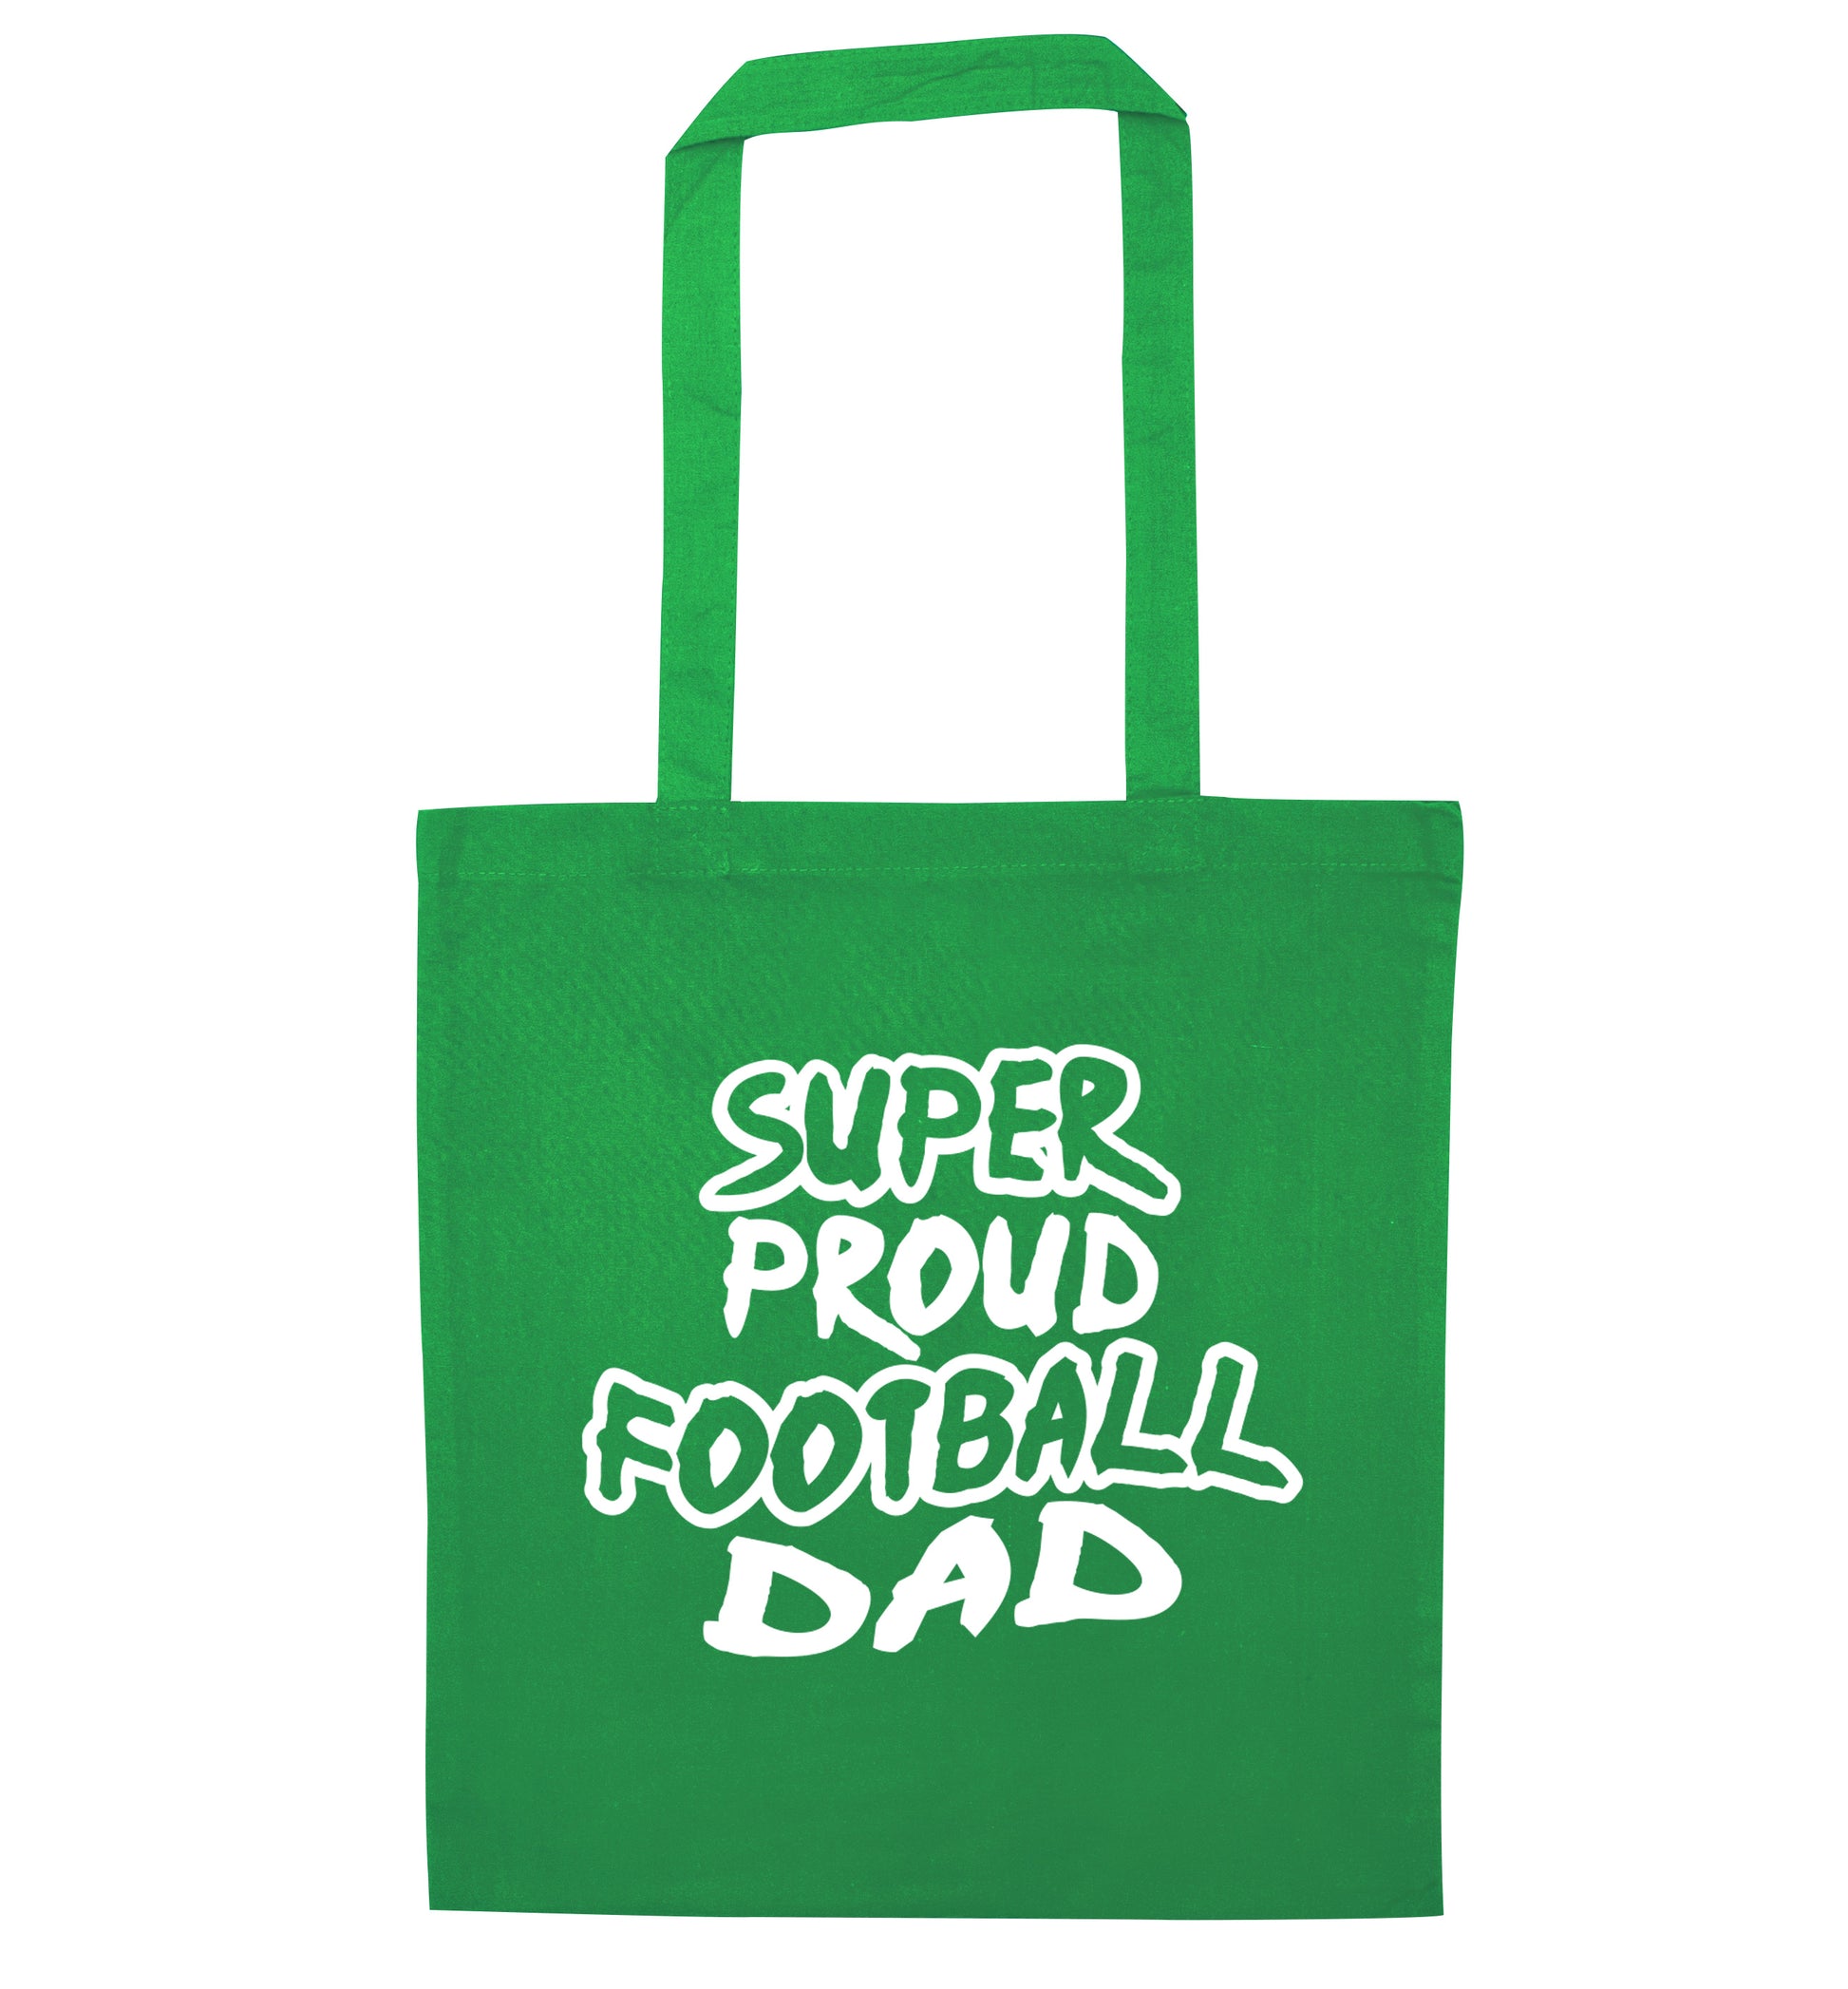 Super proud football dad green tote bag